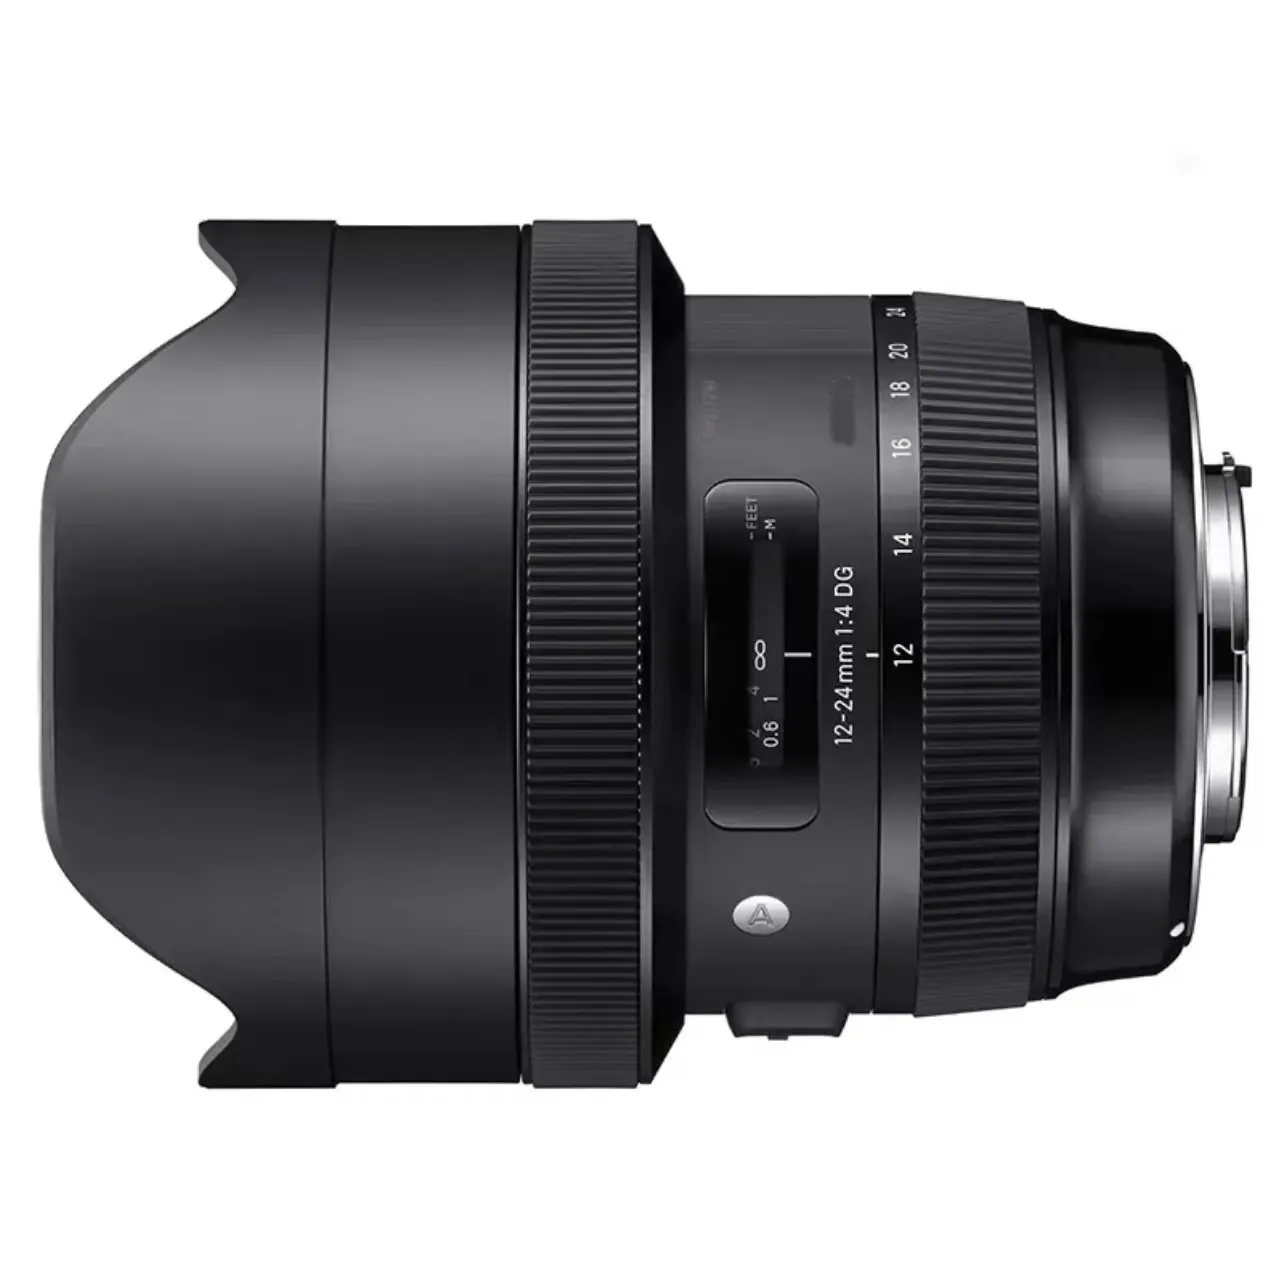 Dedicated lens used SLR digital cameras,12-24mm F 4 DG HSM ART For Canon Nikon Sony Fuji camera mount lens